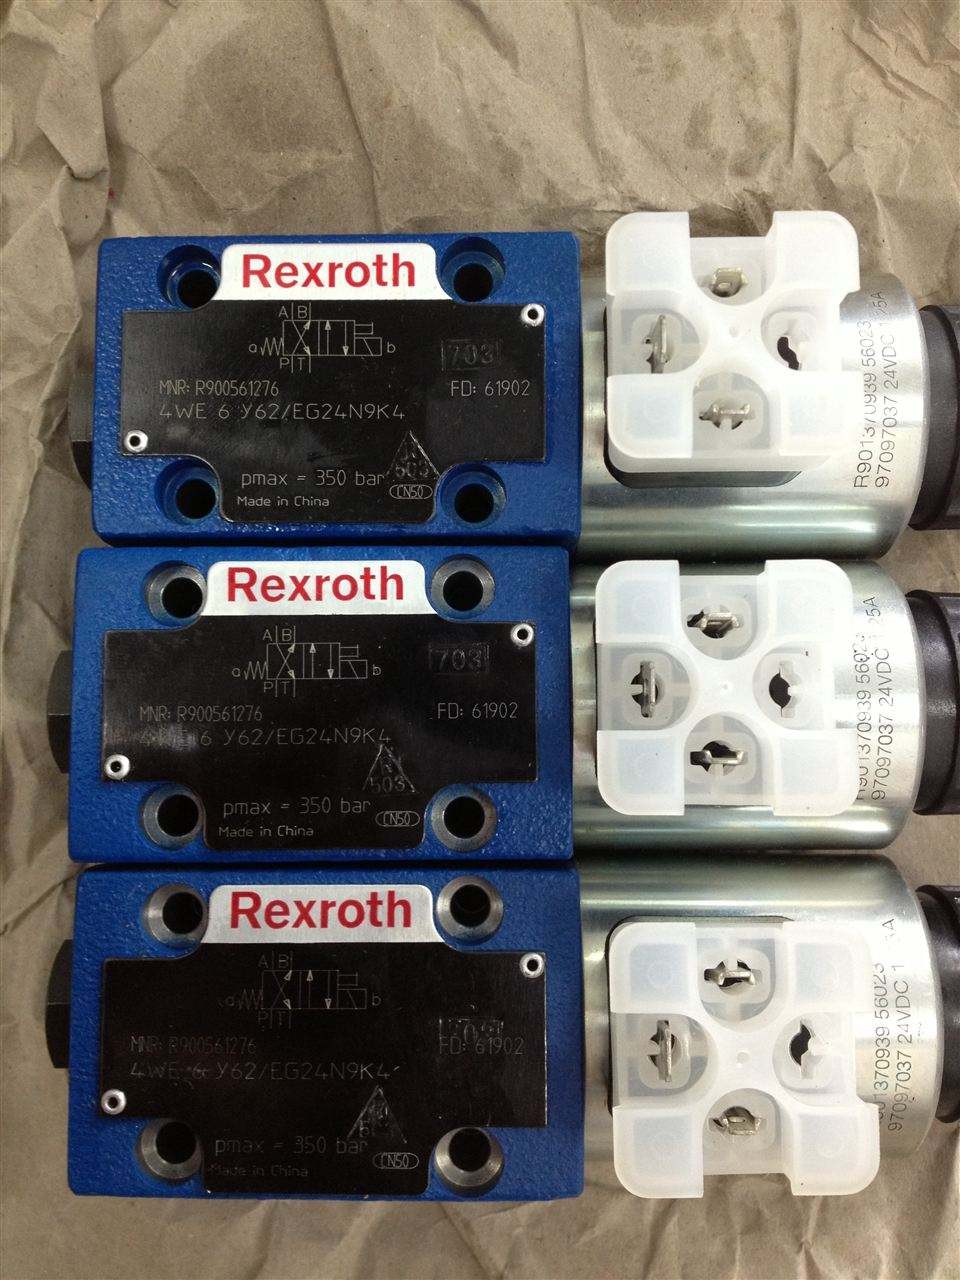 REXROTH SV 30 PA1-4X/ R900587558 Check valves